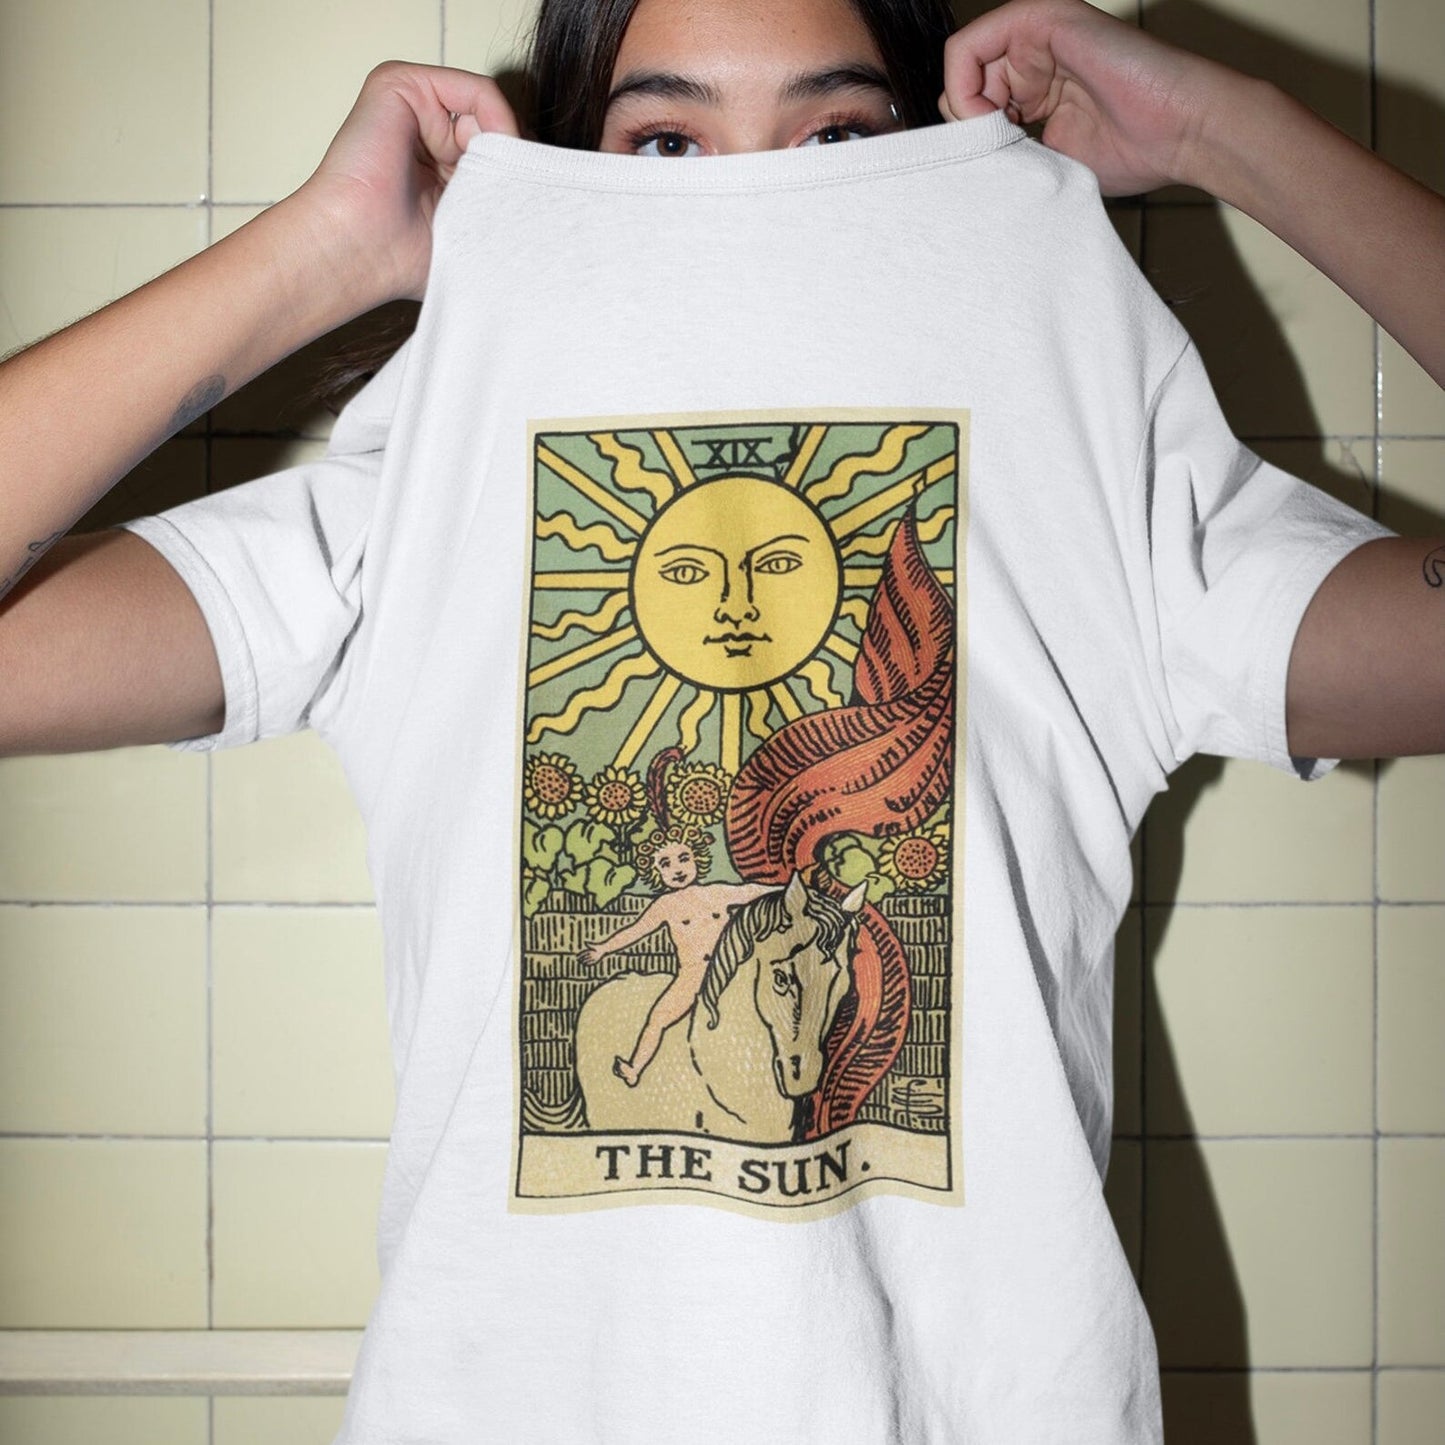 Women T-shirt Tarot Print Tops Casual Ladies Basic